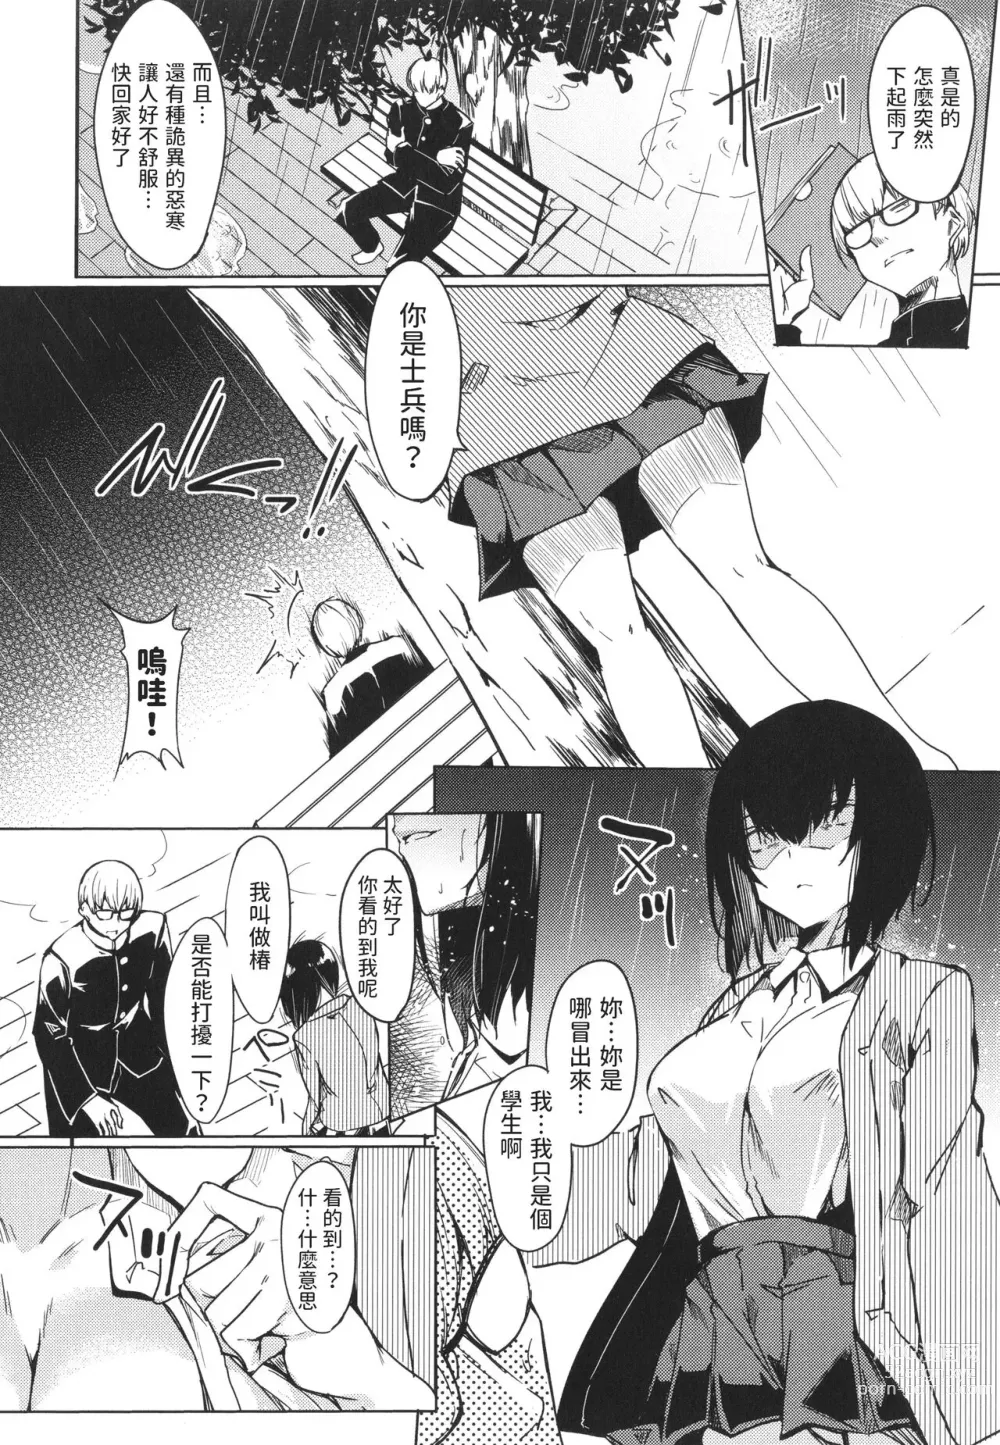 Page 2 of manga Yurei Shoujo no Oneigai